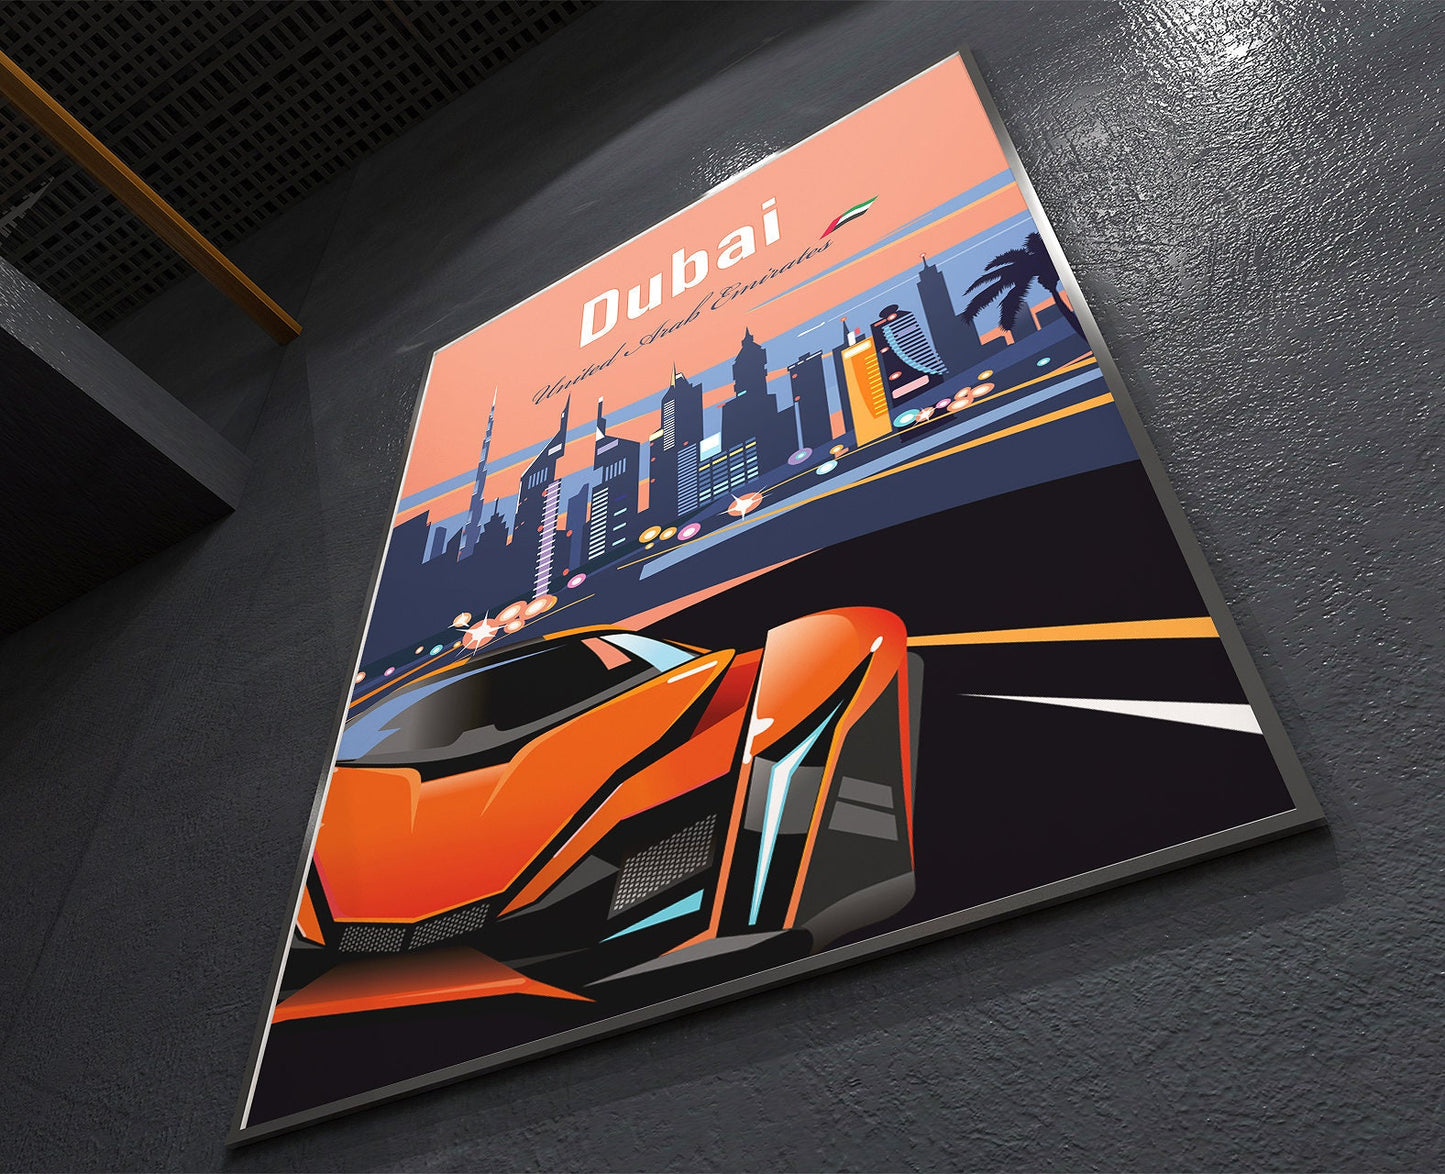 Dubai Travel Poster / Dubai Travel Print